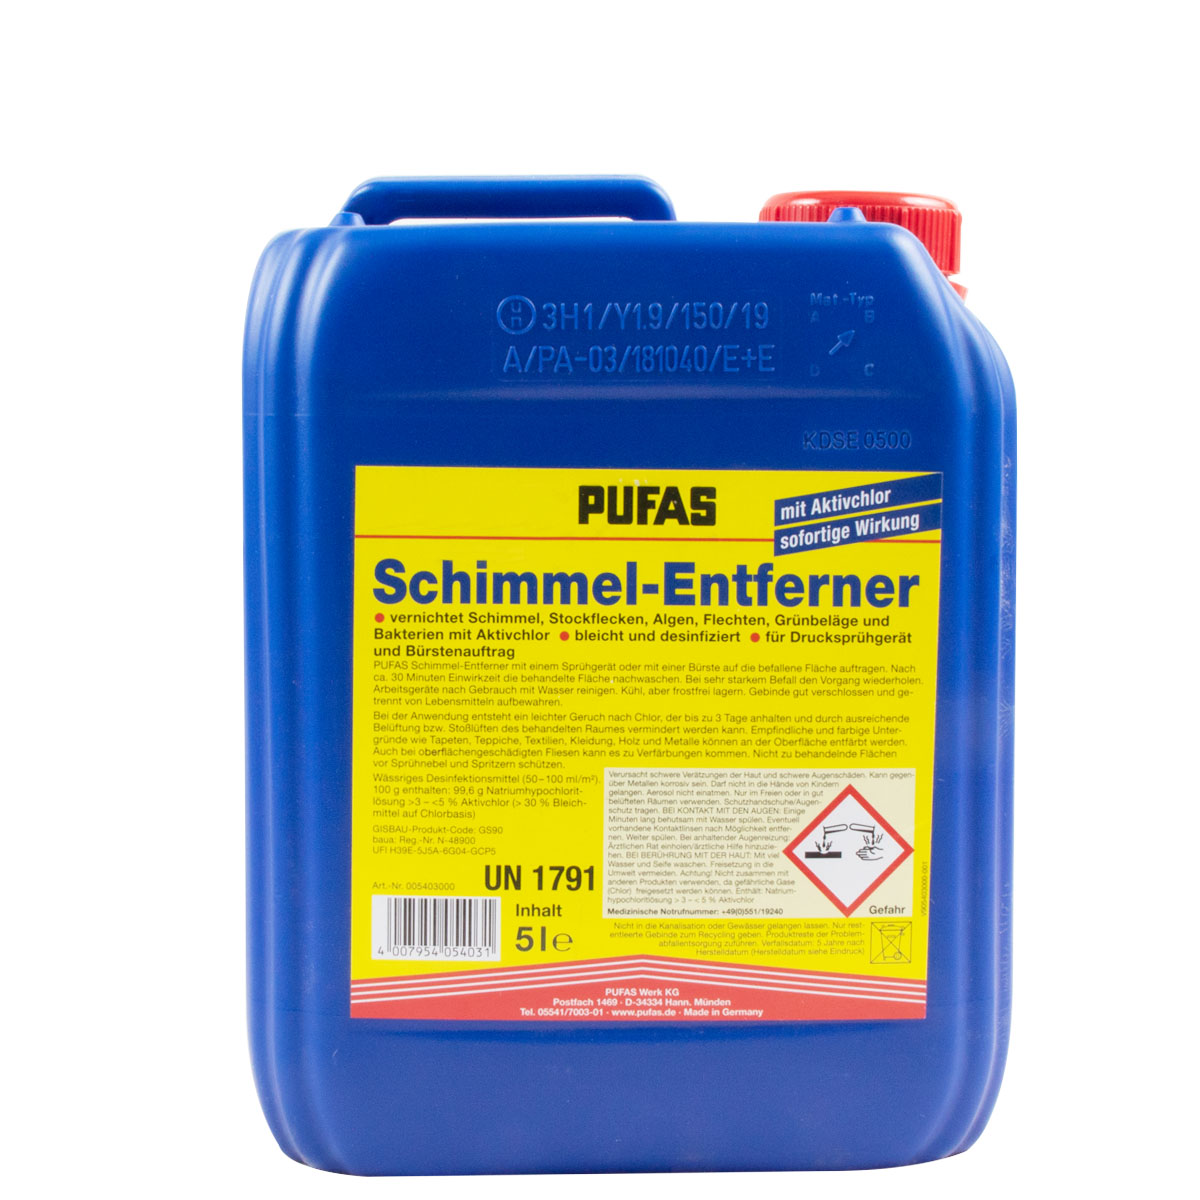 Pufas Schimmel-Entferner 5L, Schimmel-Ex